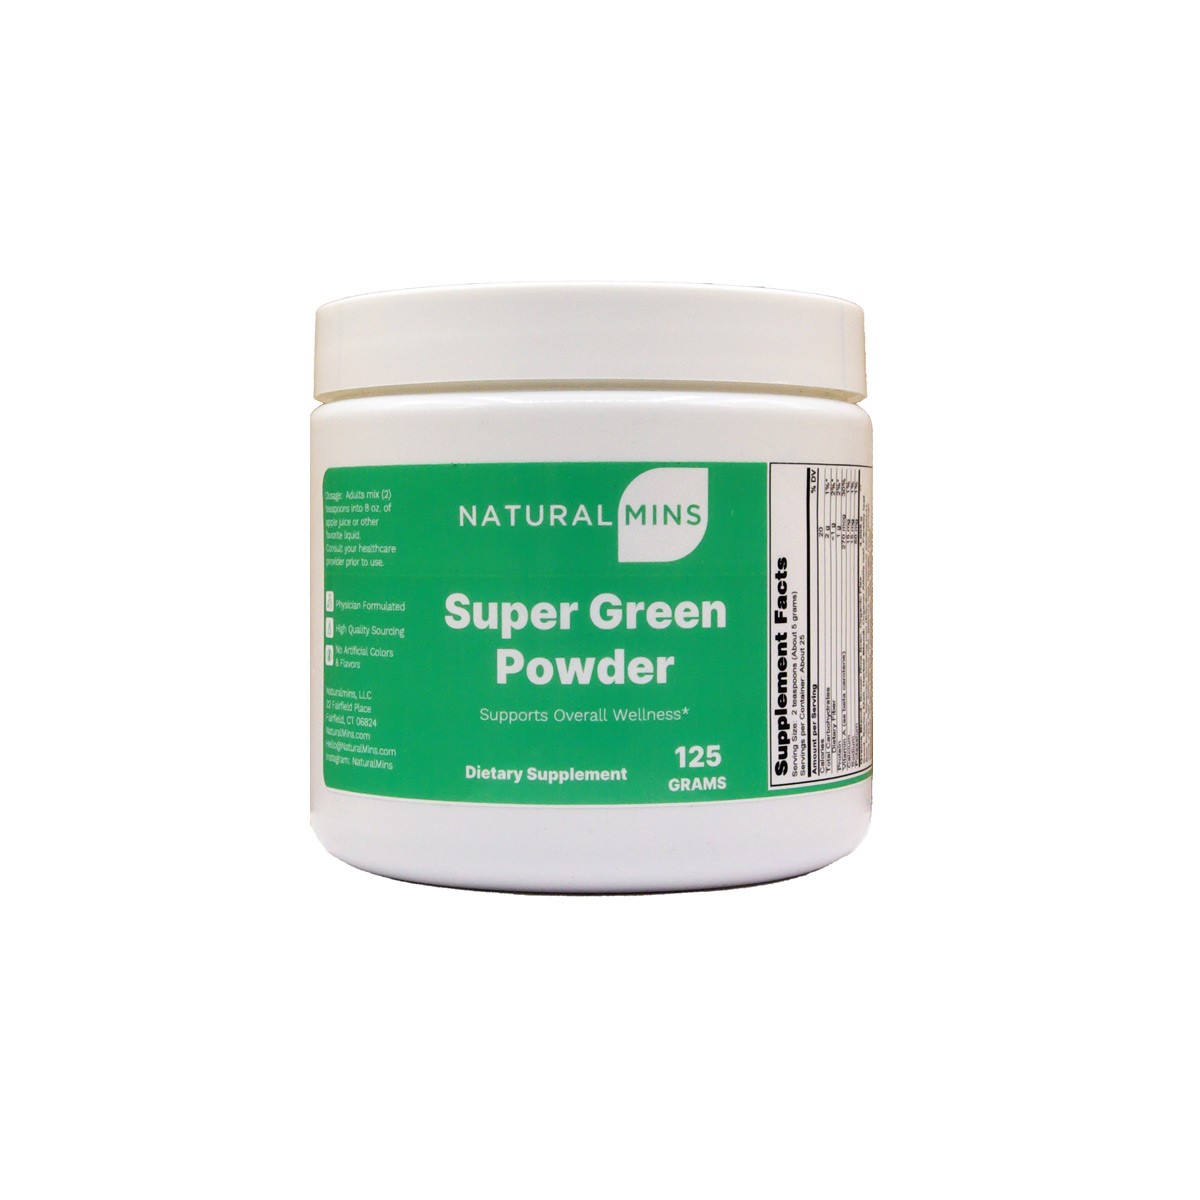 Super green powder